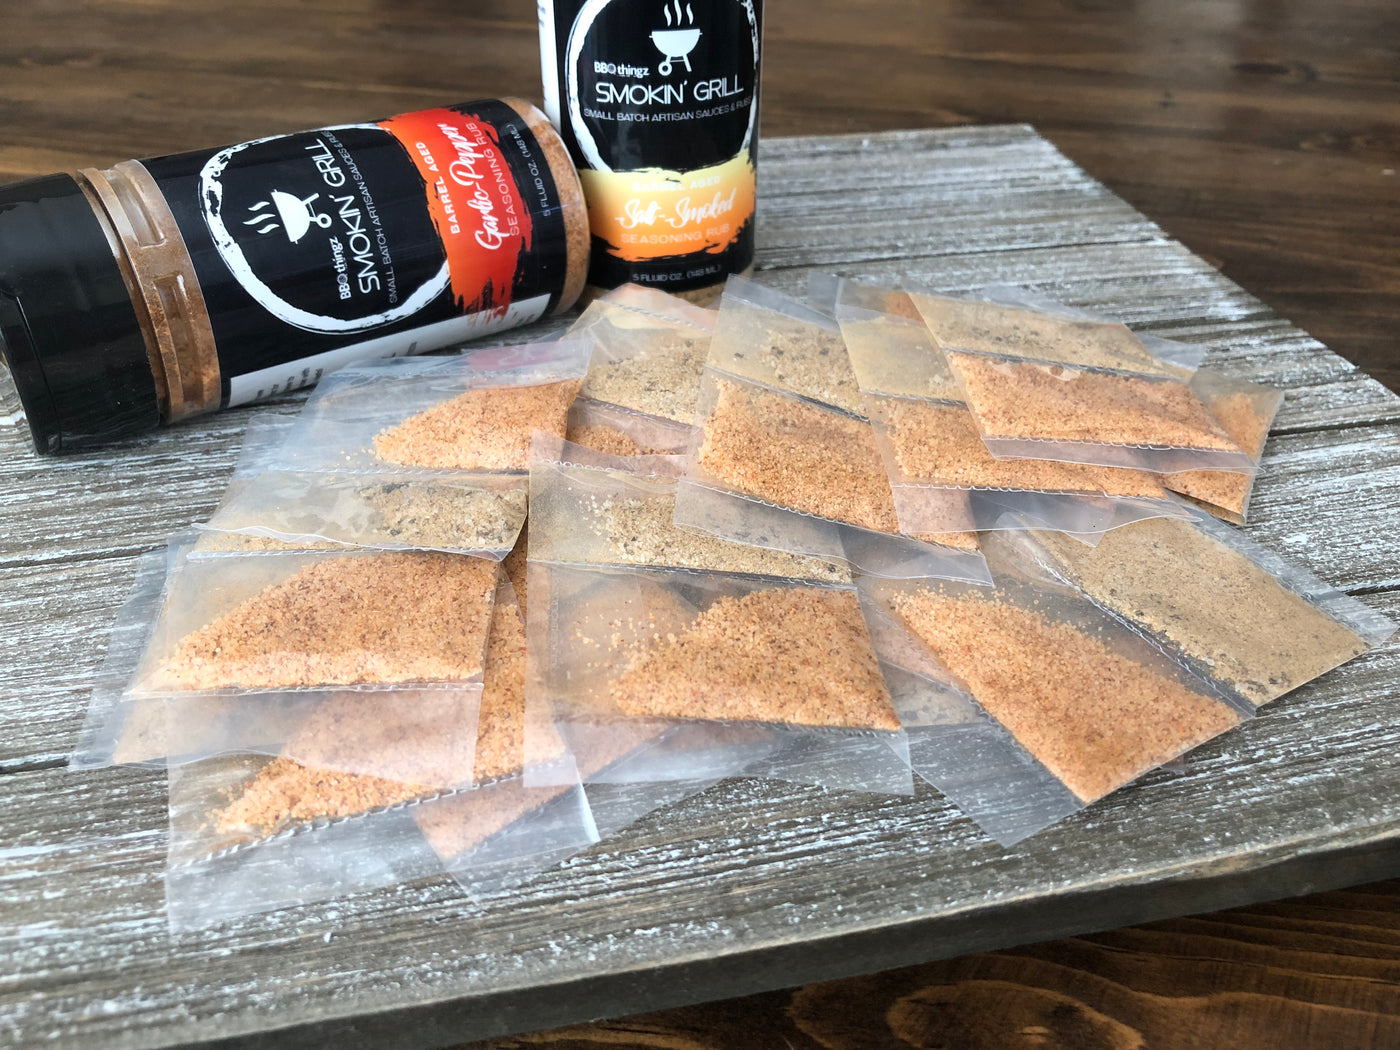 Traeger Seasoning, Sample Rub Pack (5 oz Bags/6 Flavors)